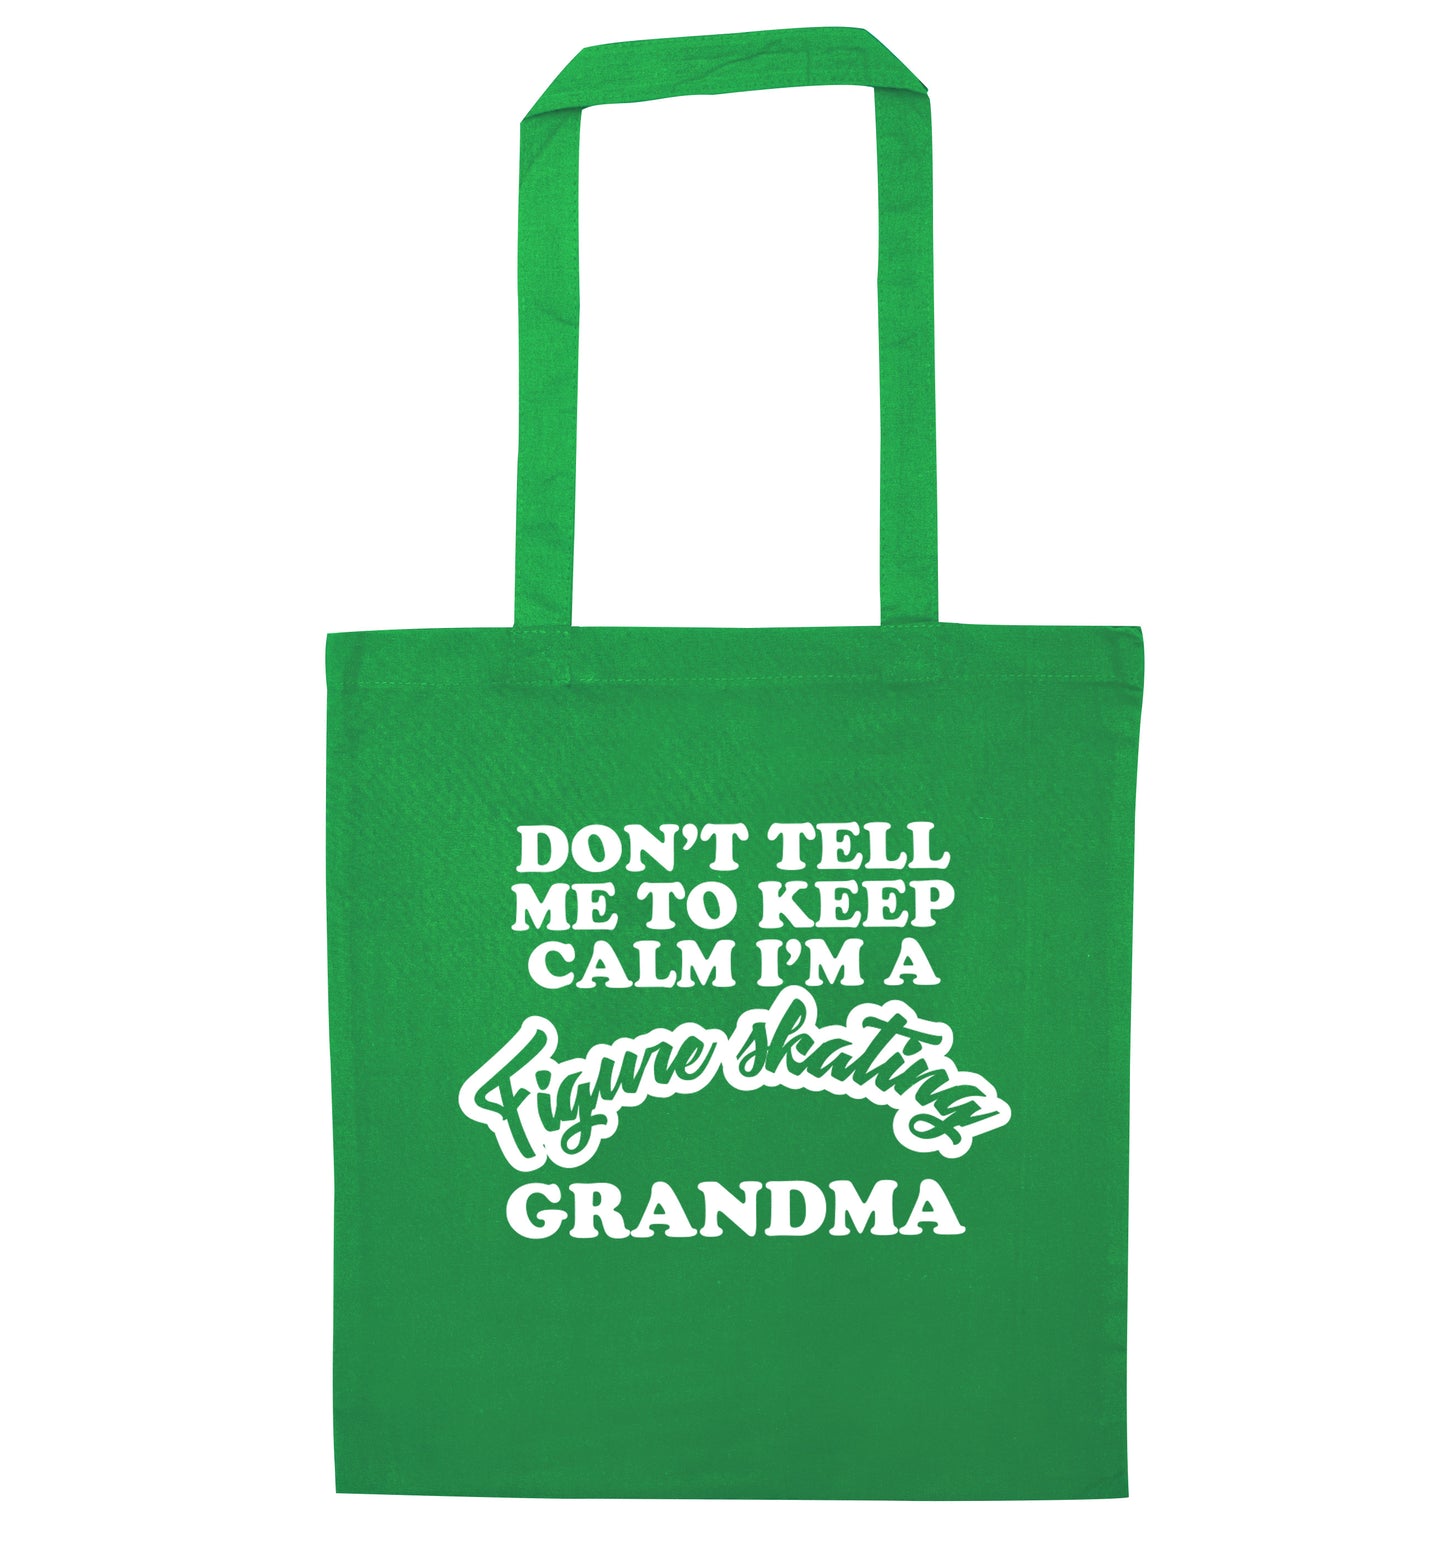 Don't tell me to keep calm I'm a figure skating grandma green tote bag